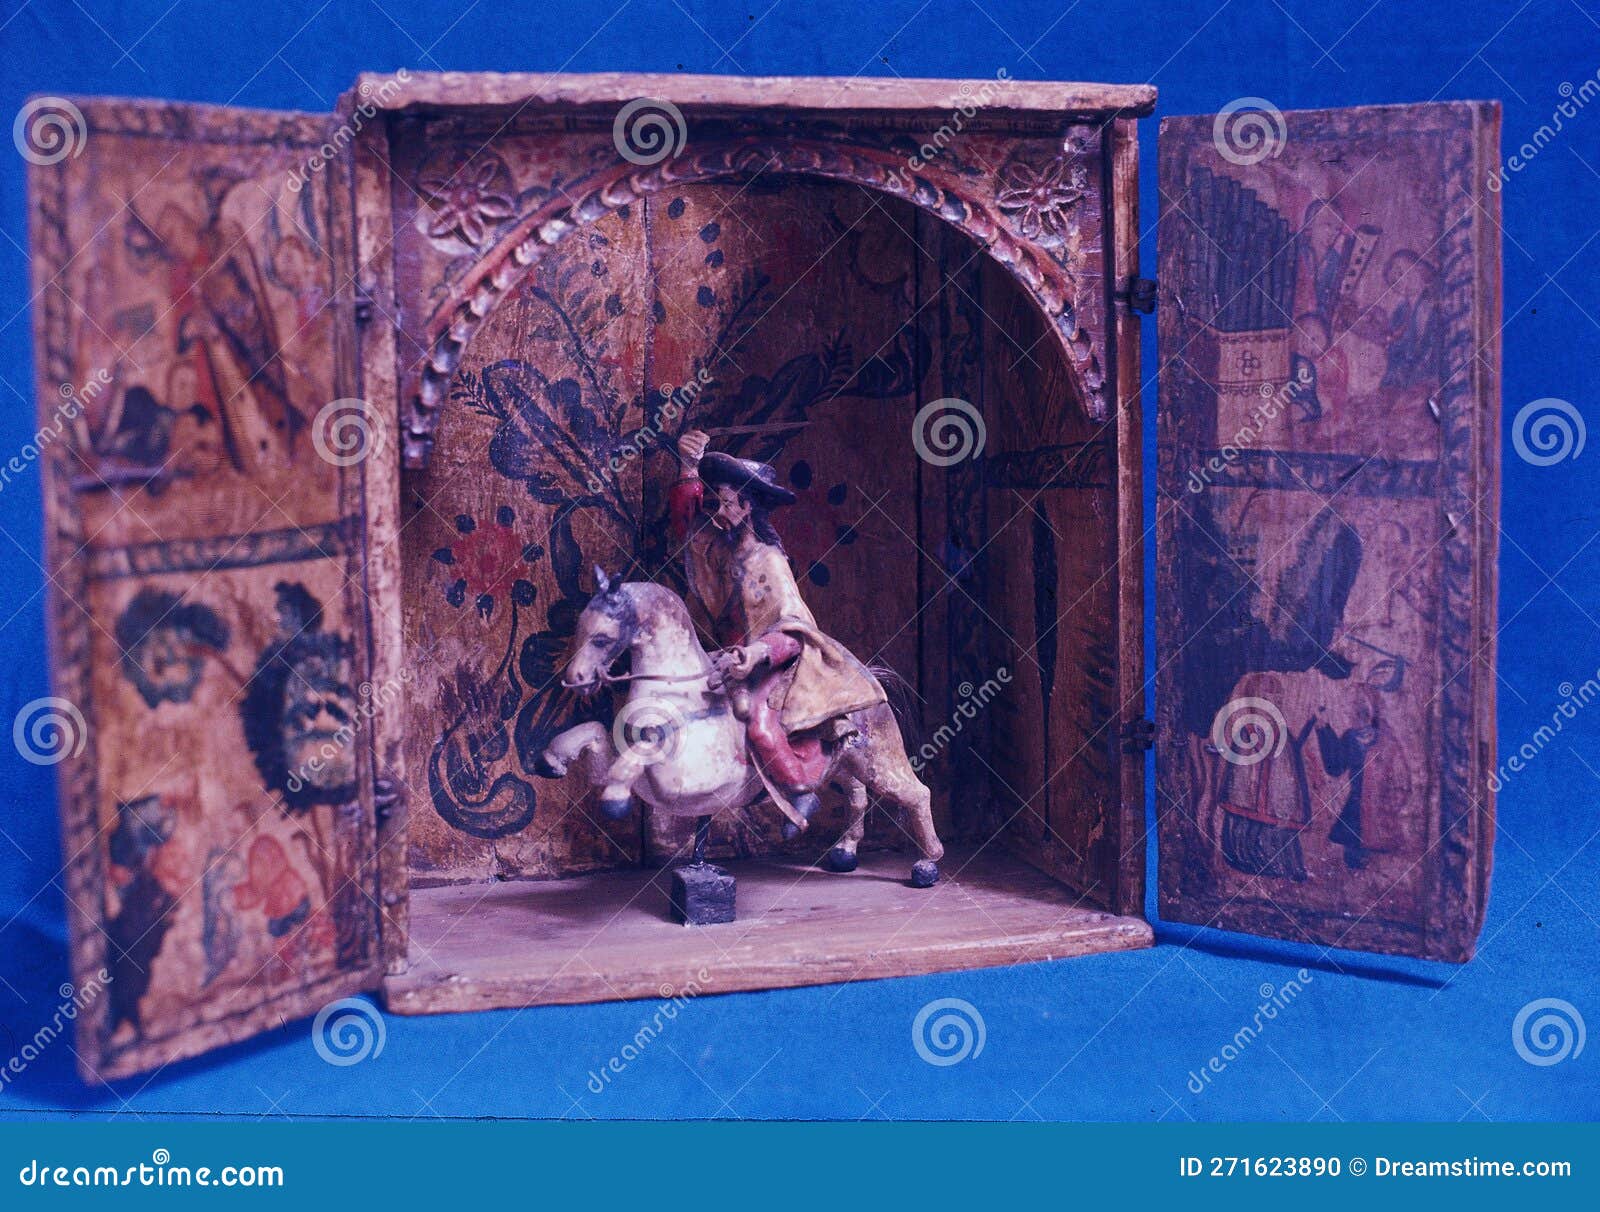 ayacucho, peru - a traditional 'retablo', a typical historical 17 century peruvian handicraft from the ayacucho region